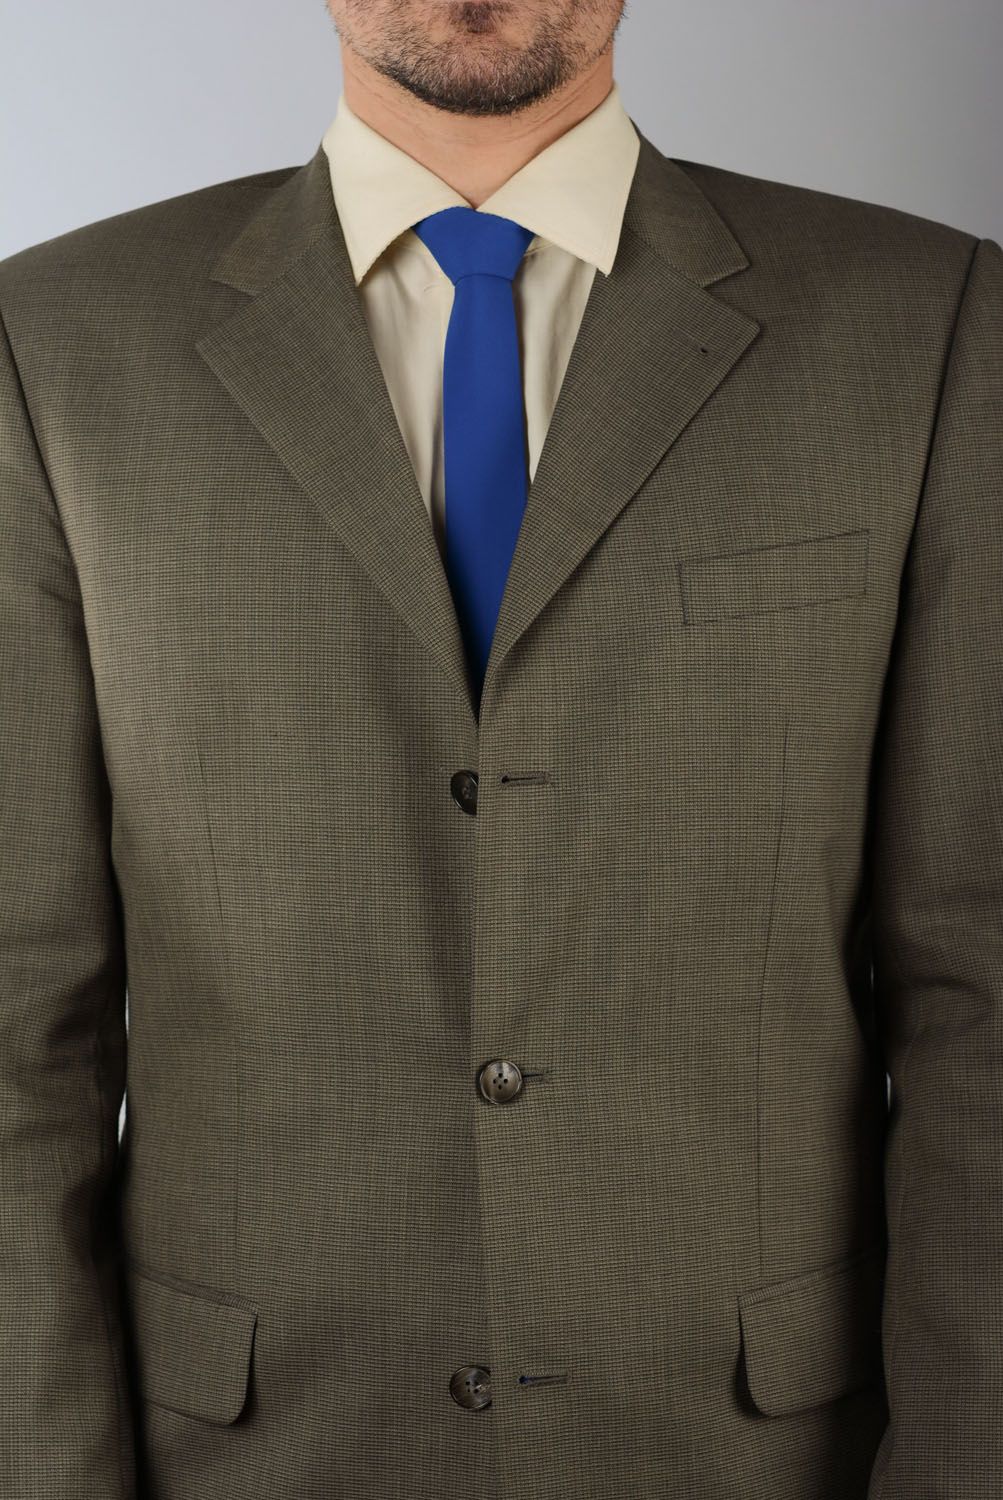 Cravate fine bleue faite main  photo 4